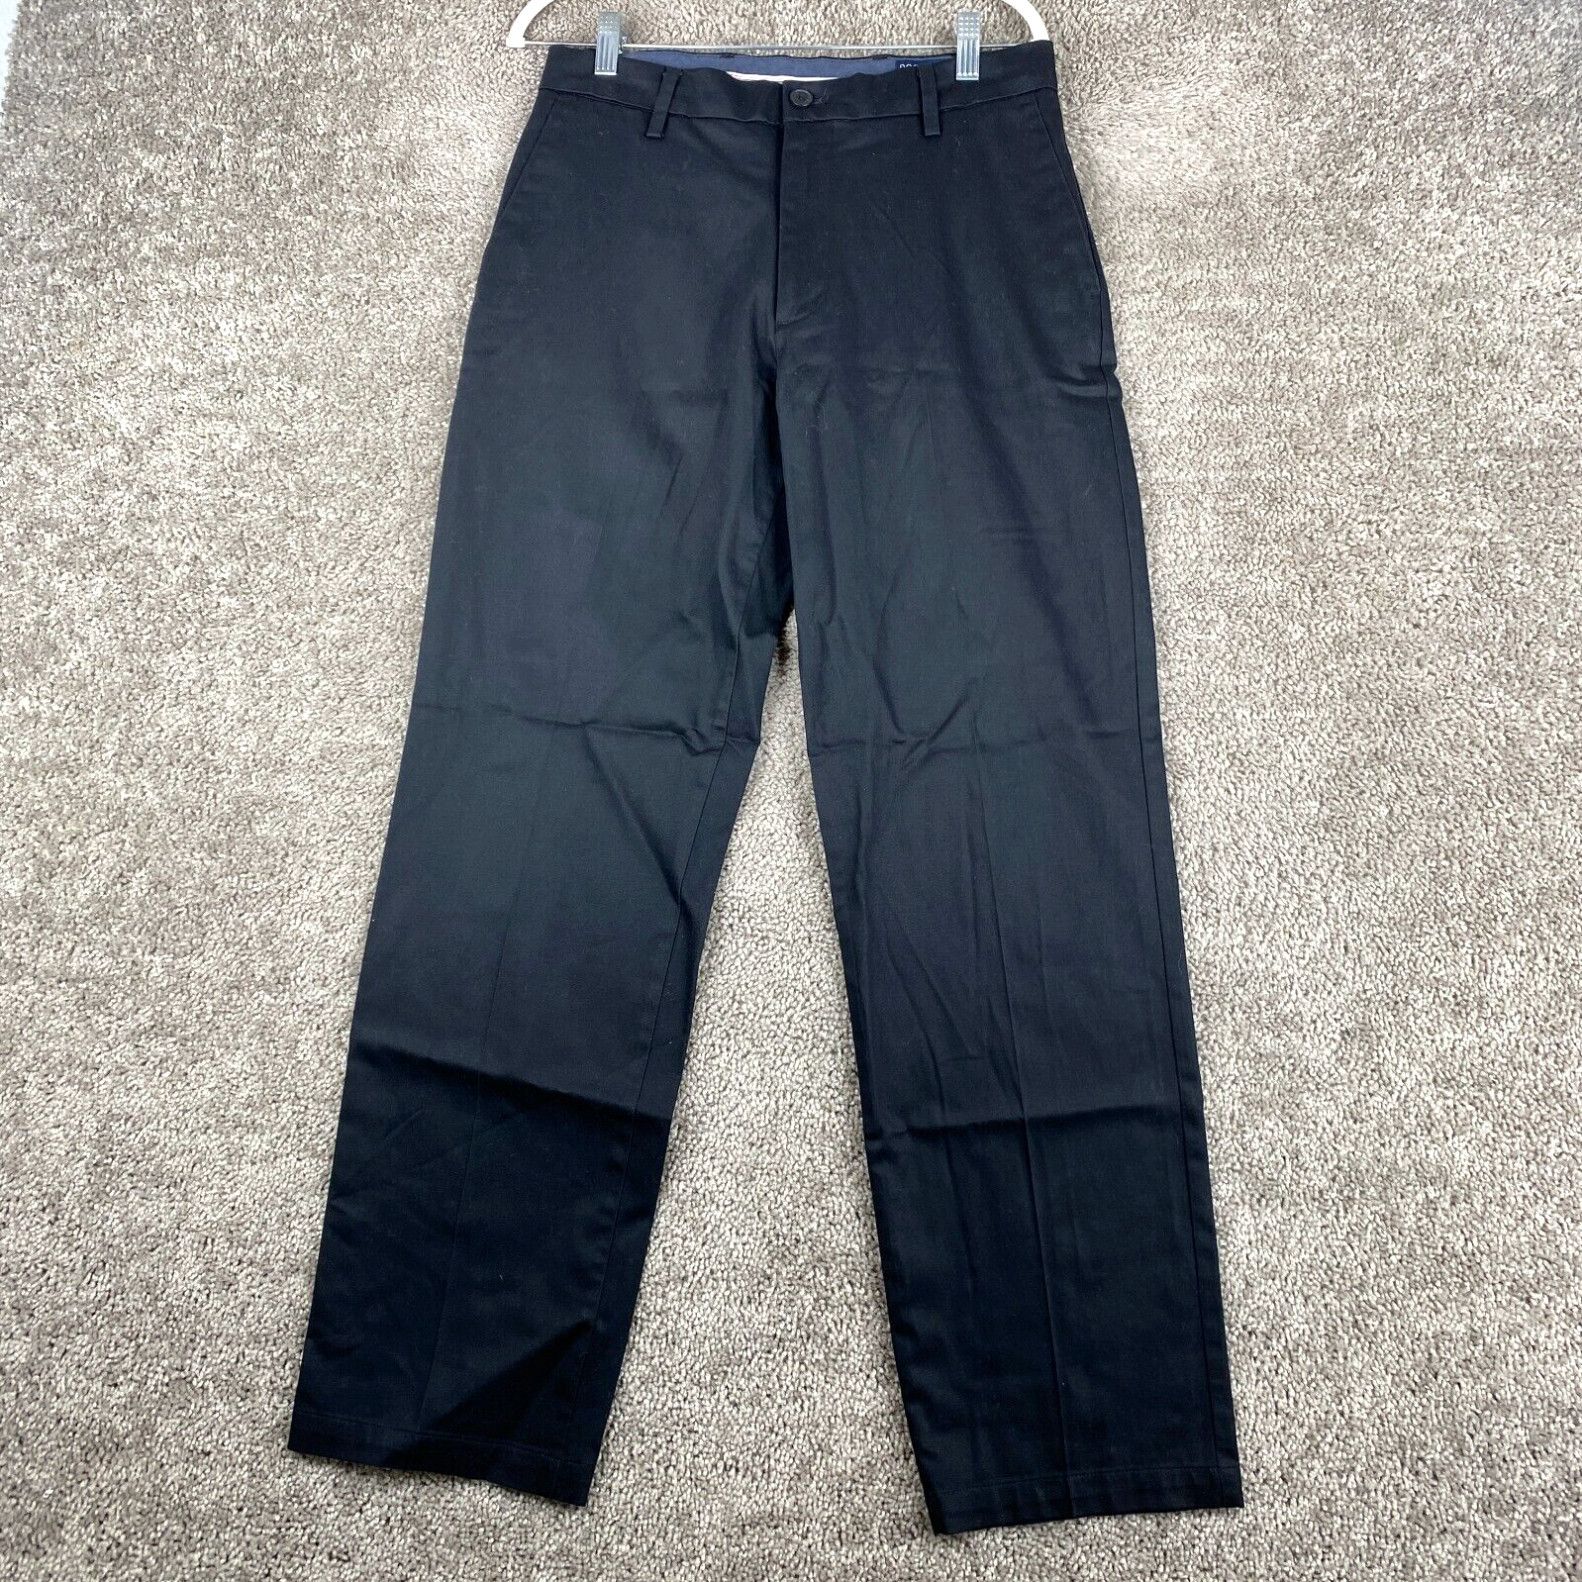 Dockers Dockers Classic Signature Khaki Pants Men's Size W30xL32 Black ...